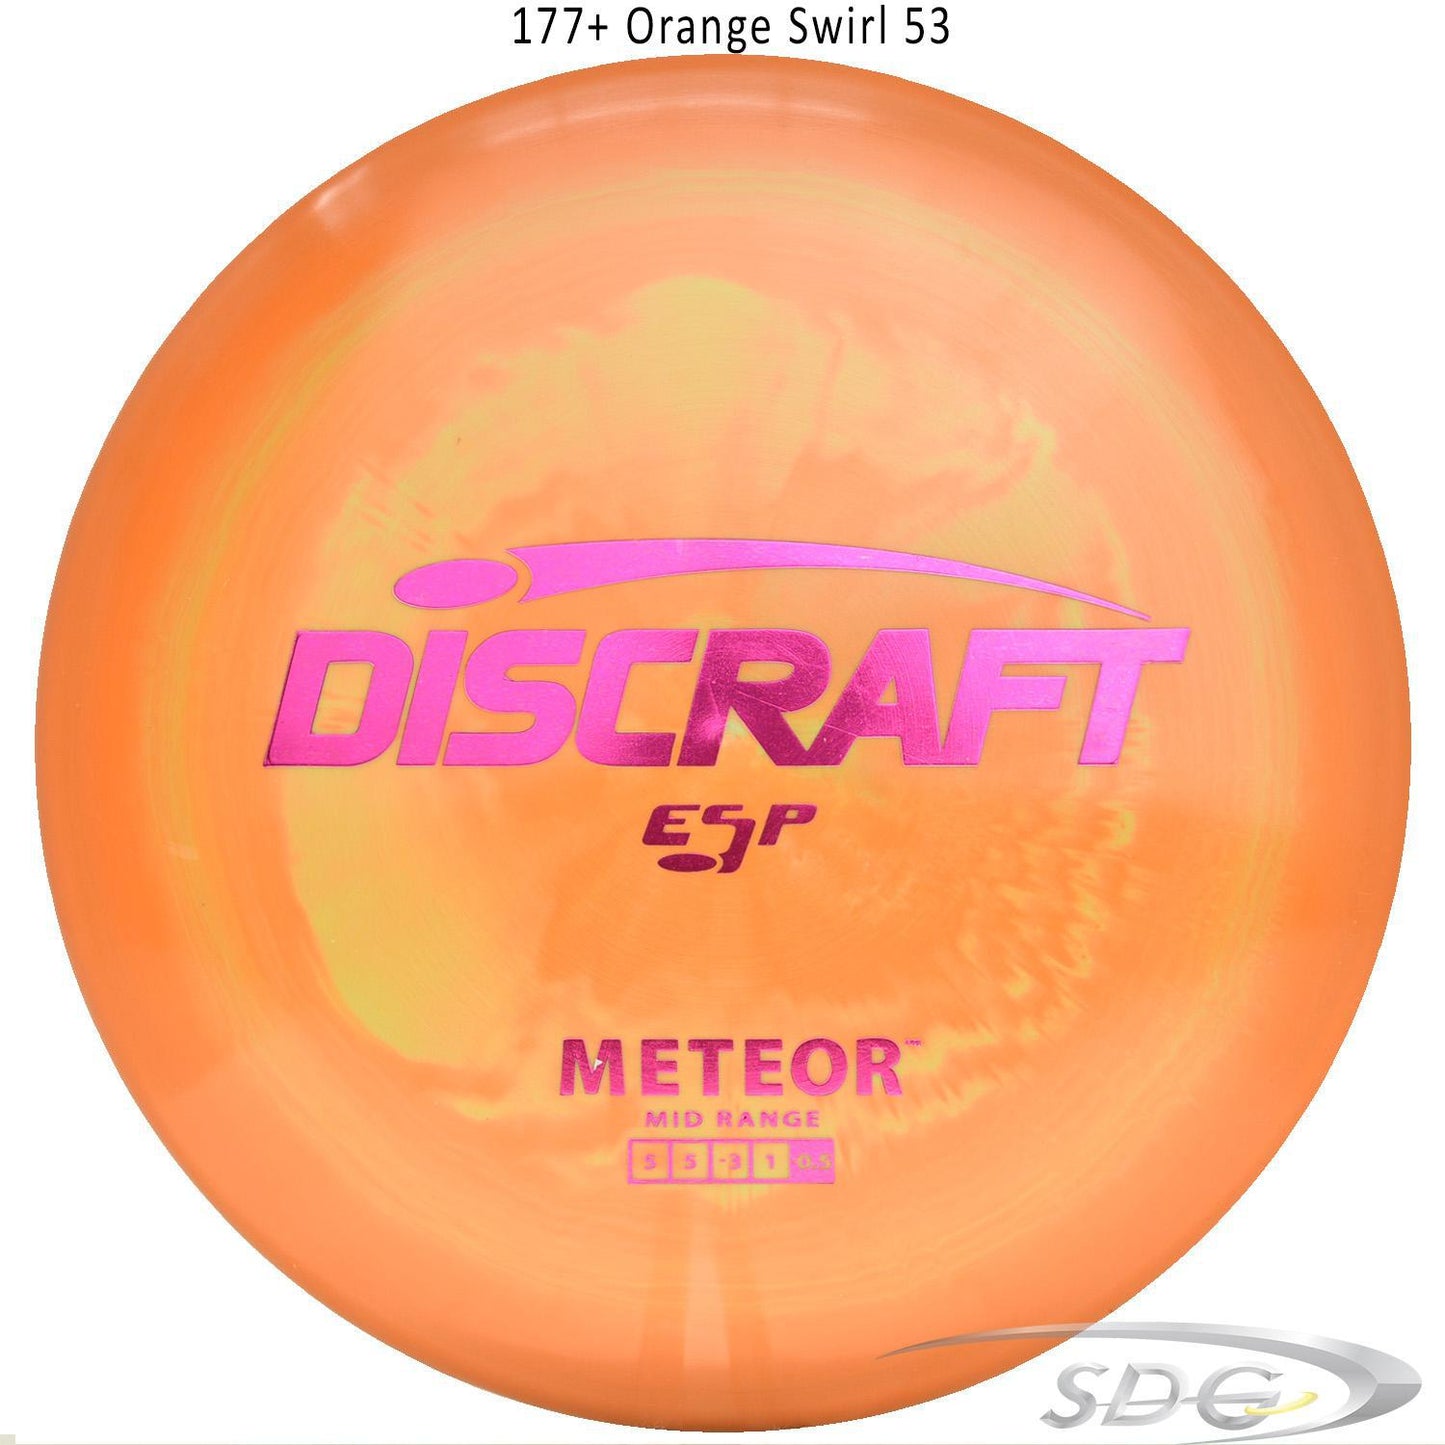 discraft-esp-meteor-disc-golf-mid-range 177+ Orange Swirl 53